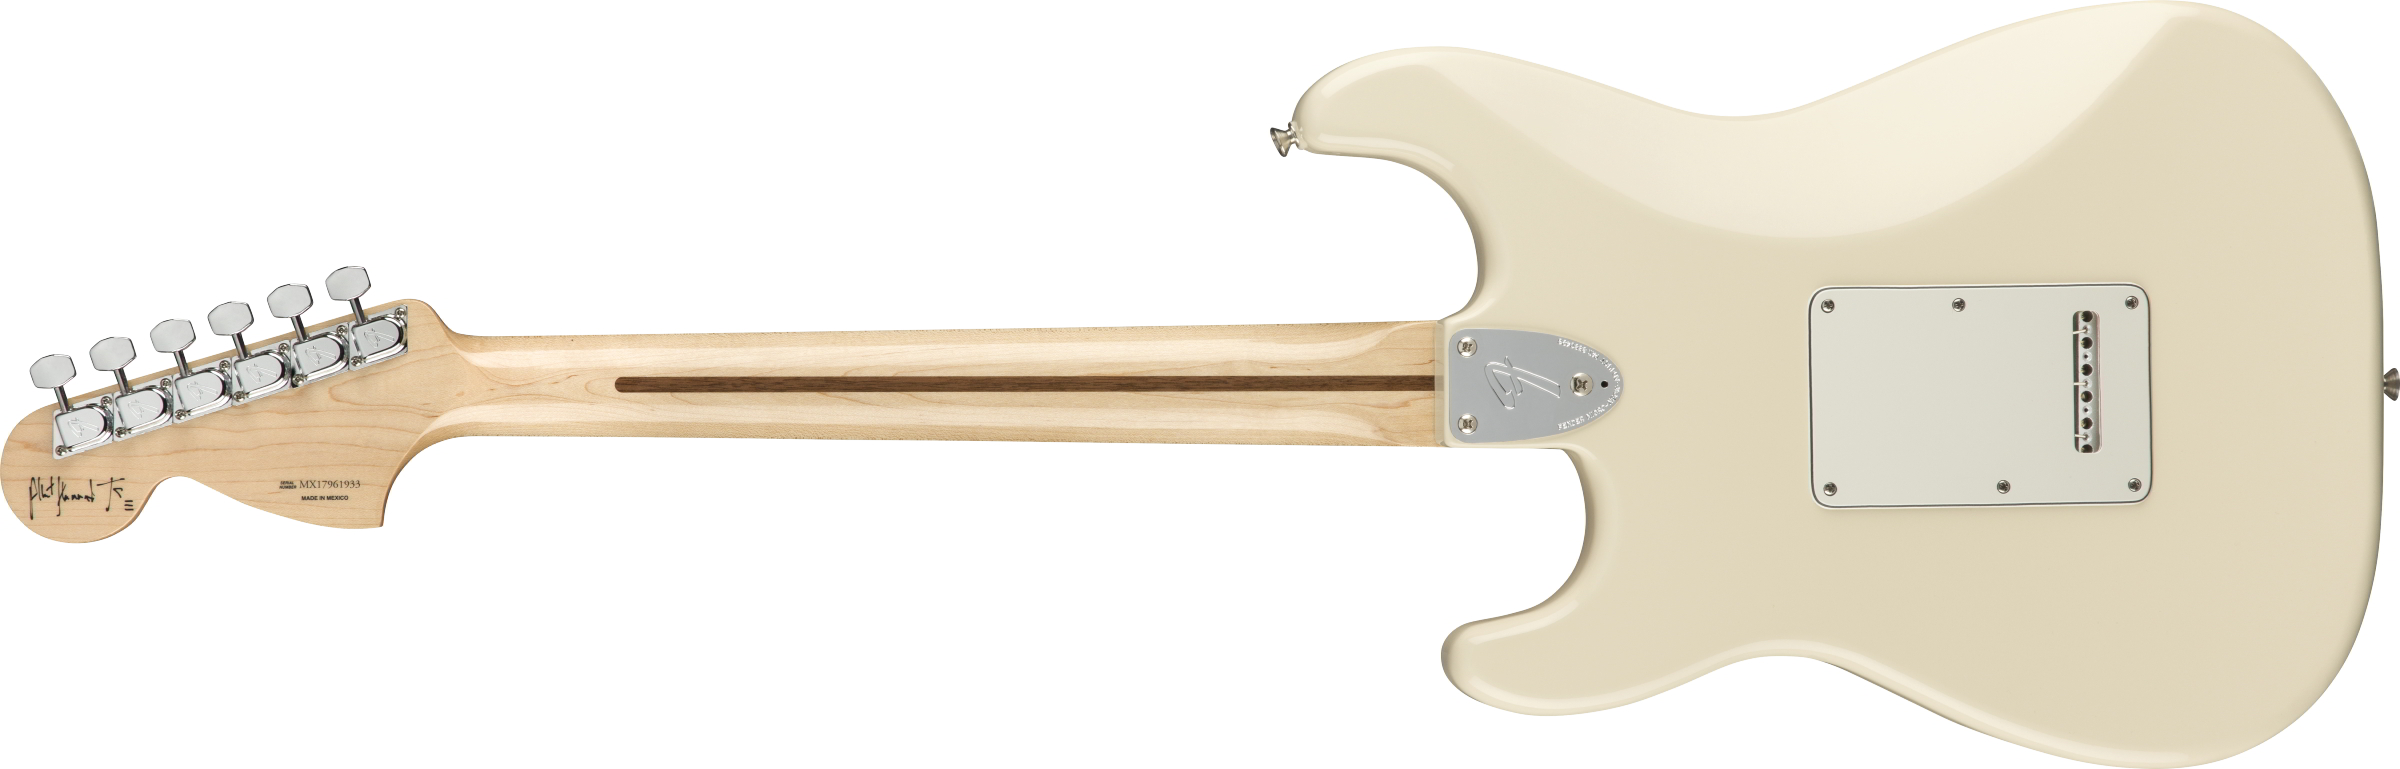 Albert Hammond Jr. Signature Stratocaster Rosewood Fingerboard Olympic White背面画像